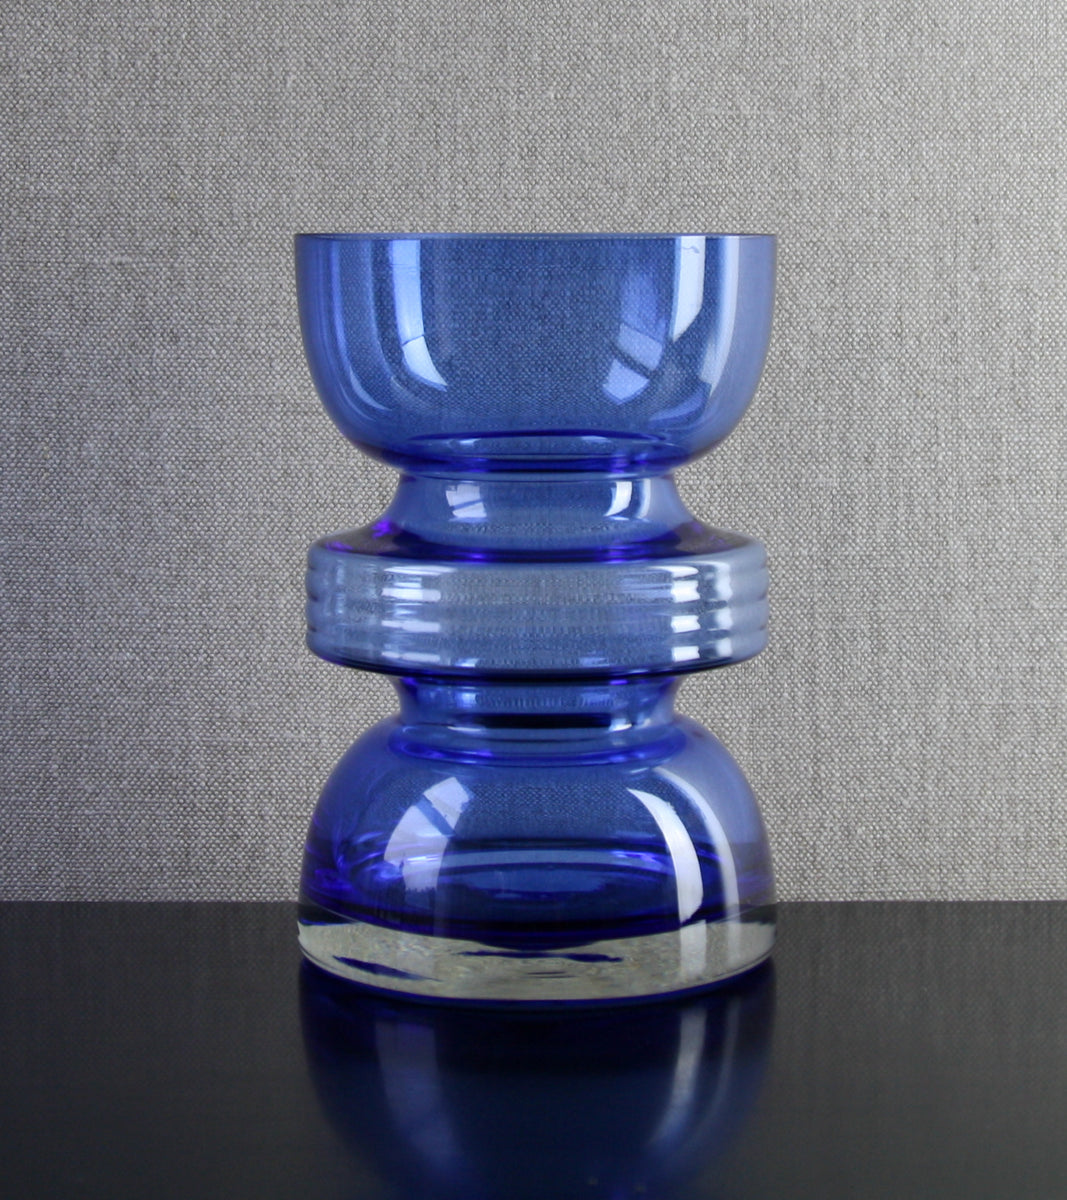 Blue Model 1441 "Tiimalasi" (Hourglass) Vase by Nanny Still, 1970